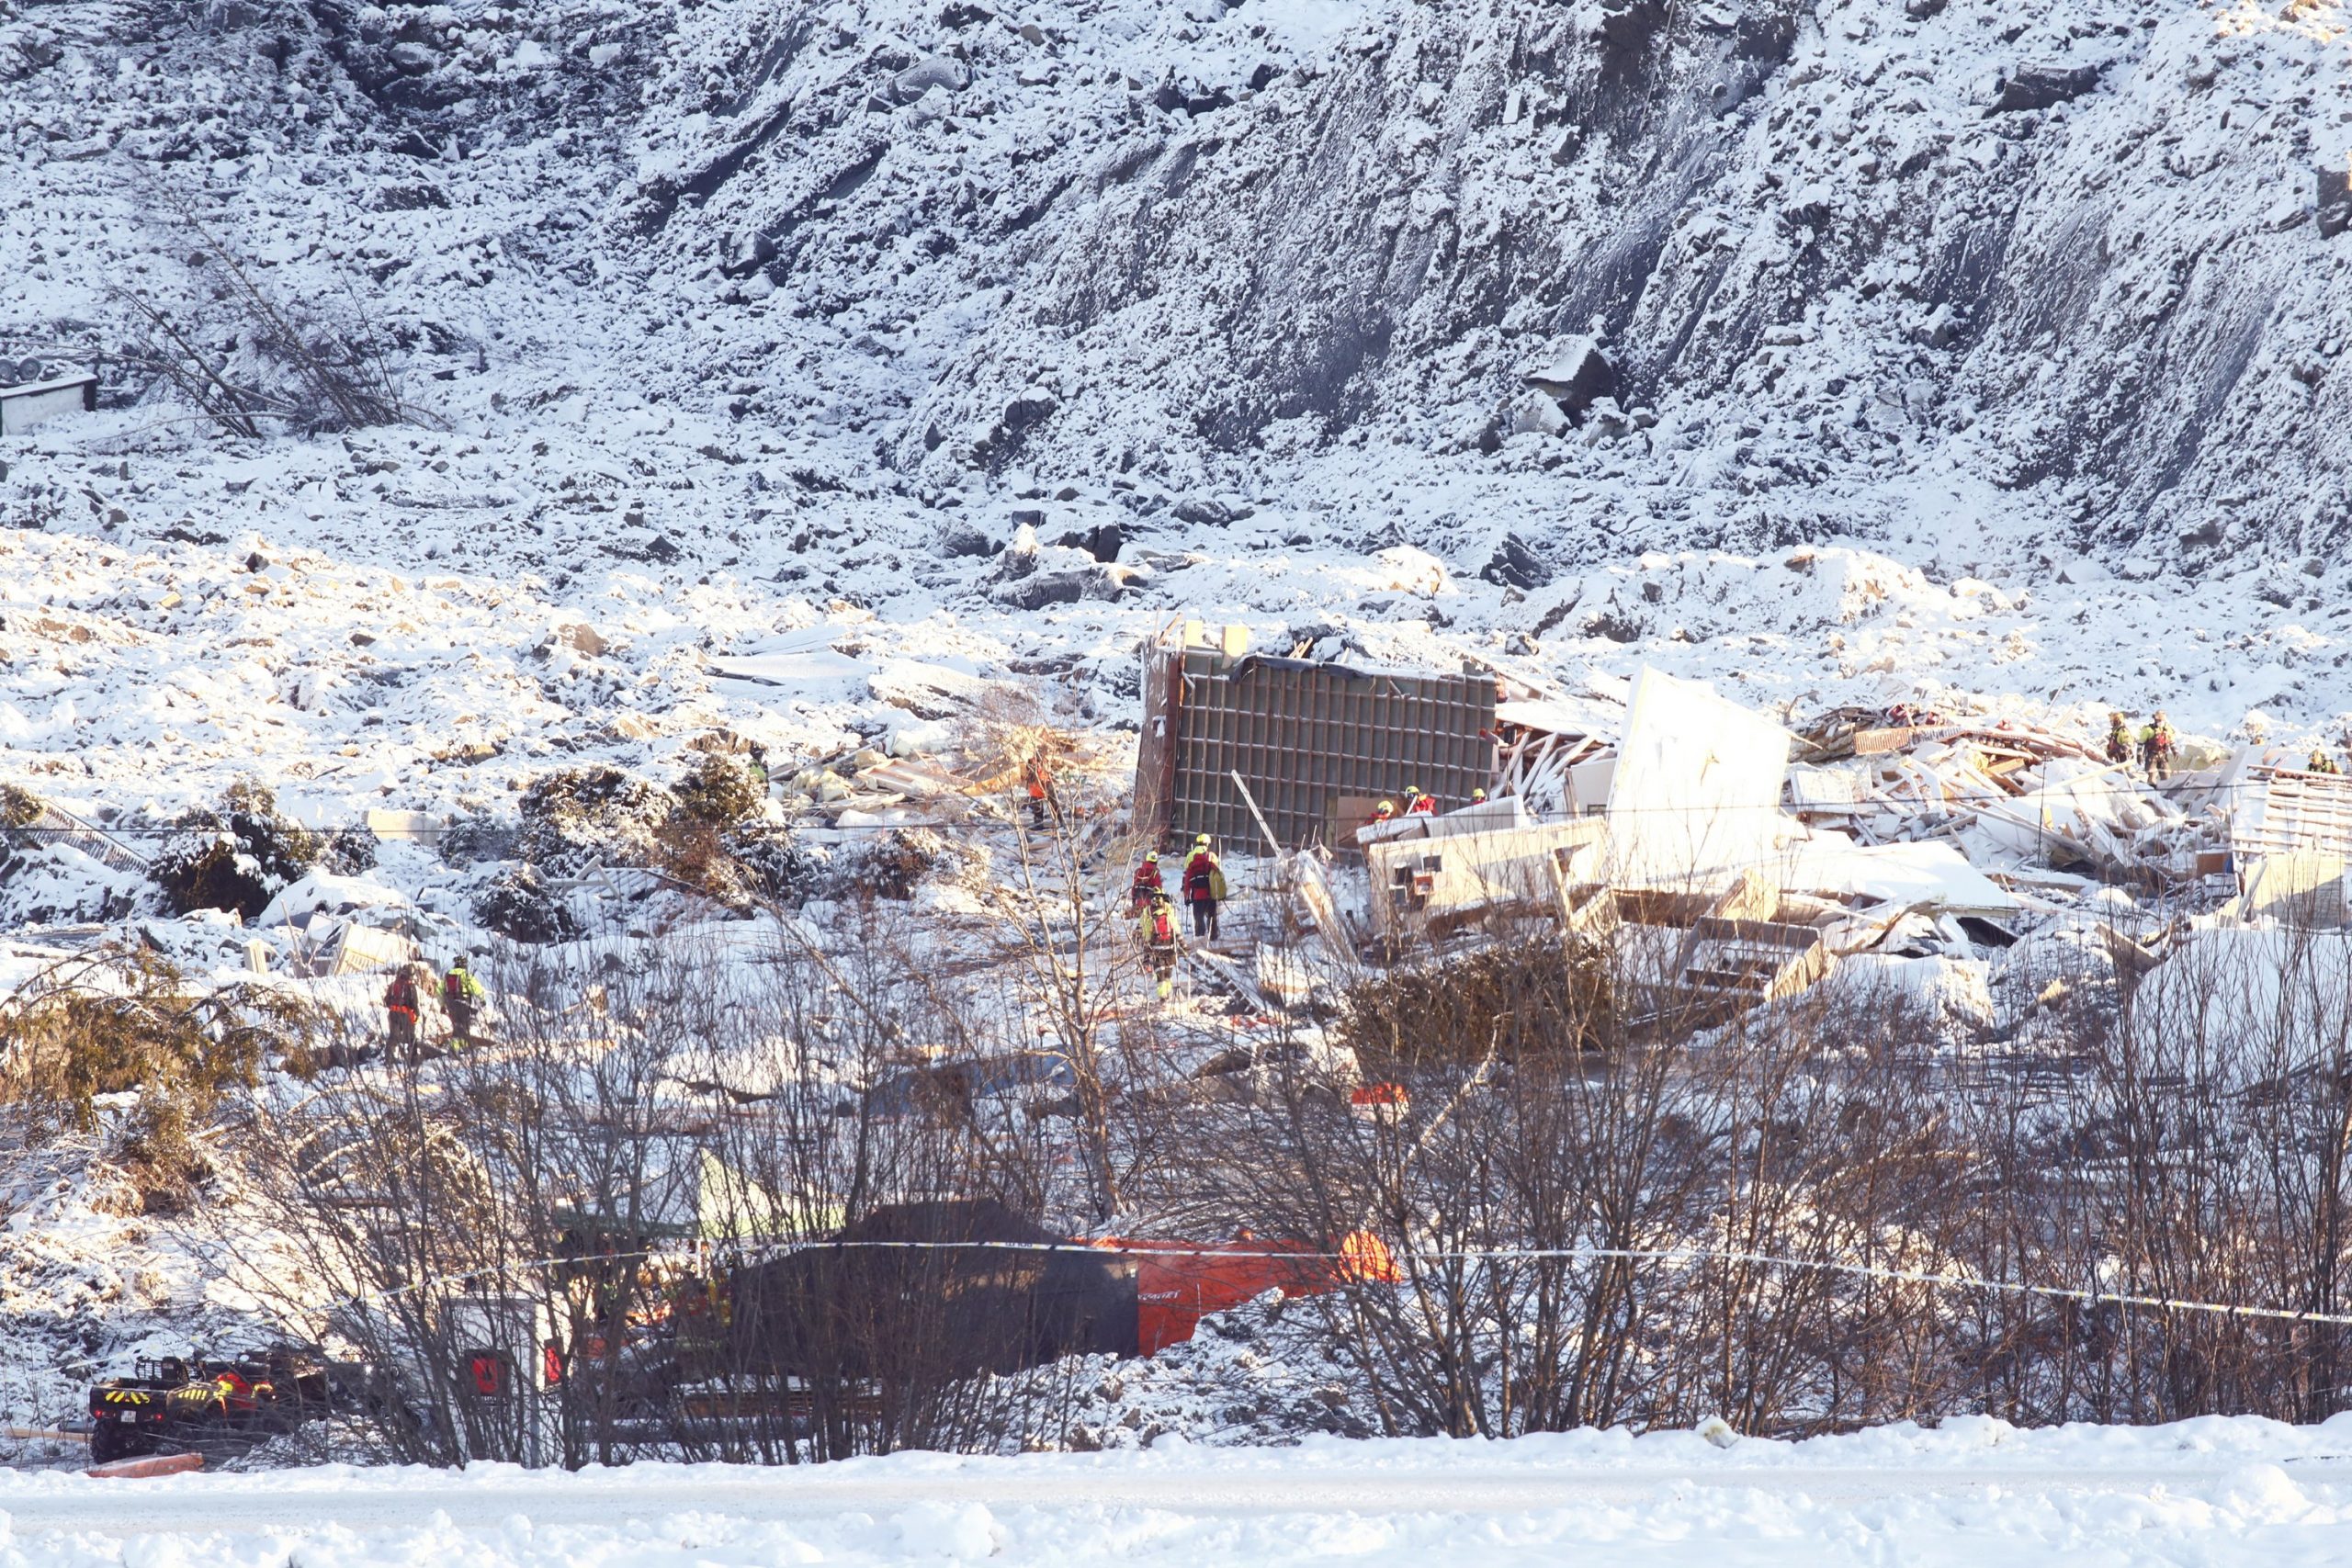 Dashed hope of a landslide in Norway that left 7 dead;  3 missing